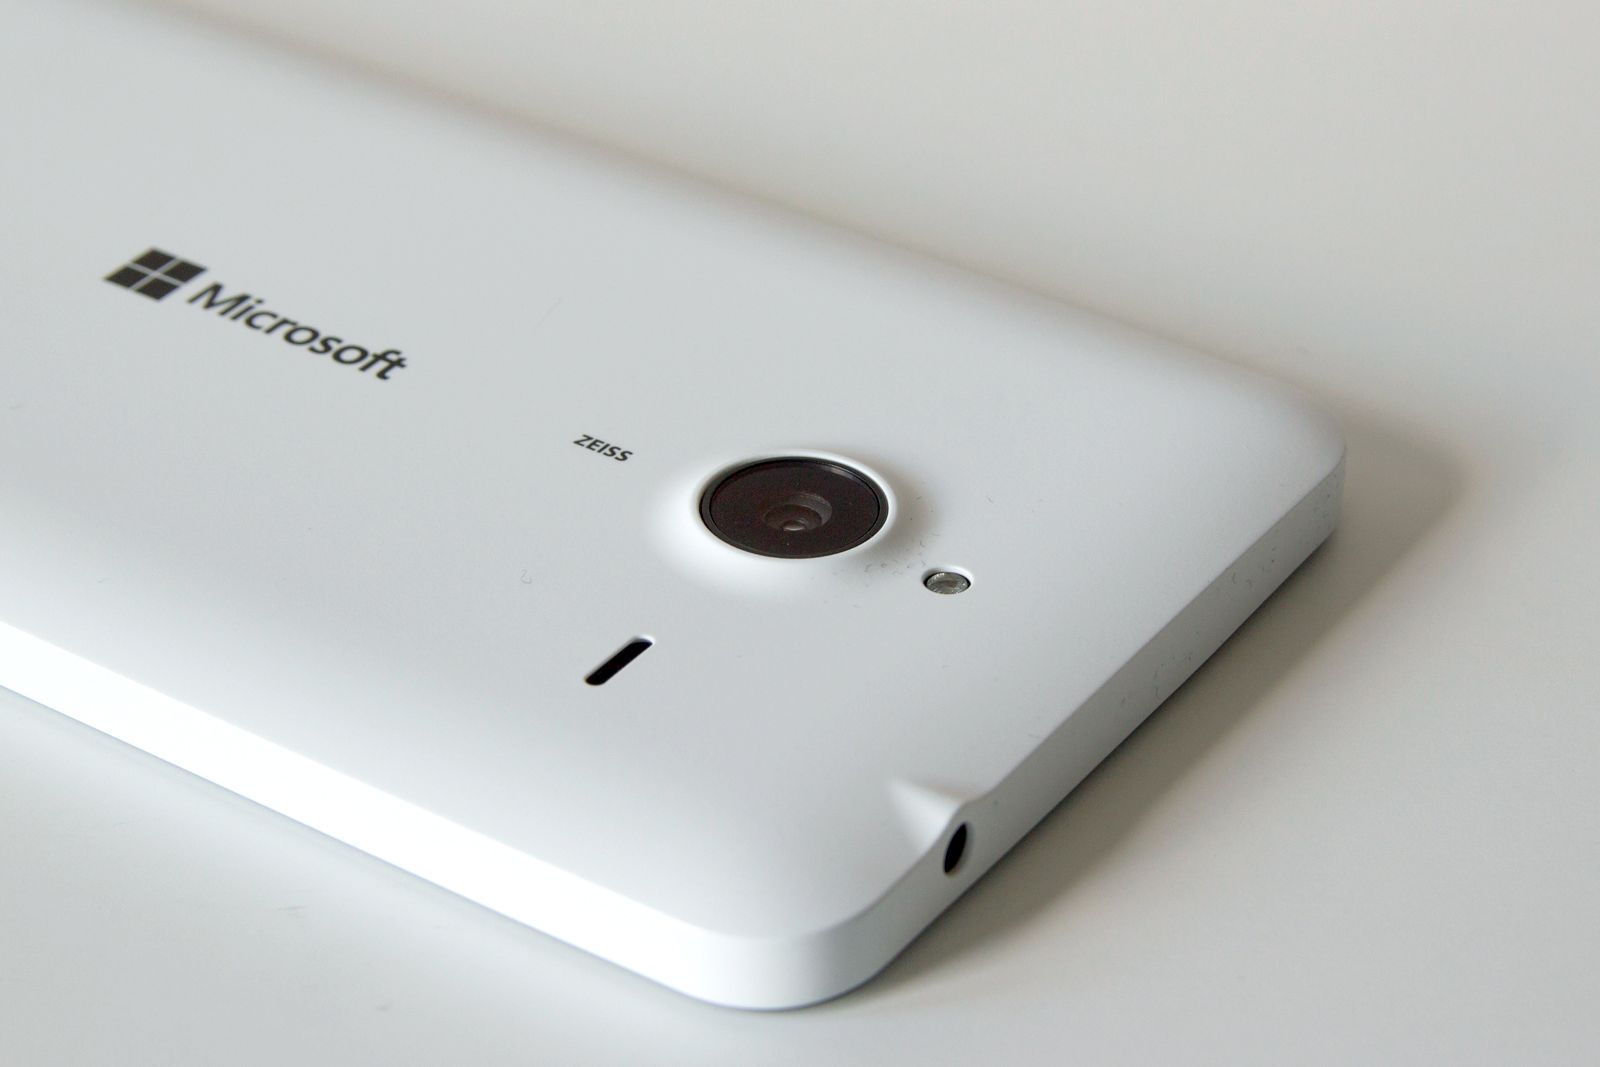 microsoft lumia 640 xl review image 4